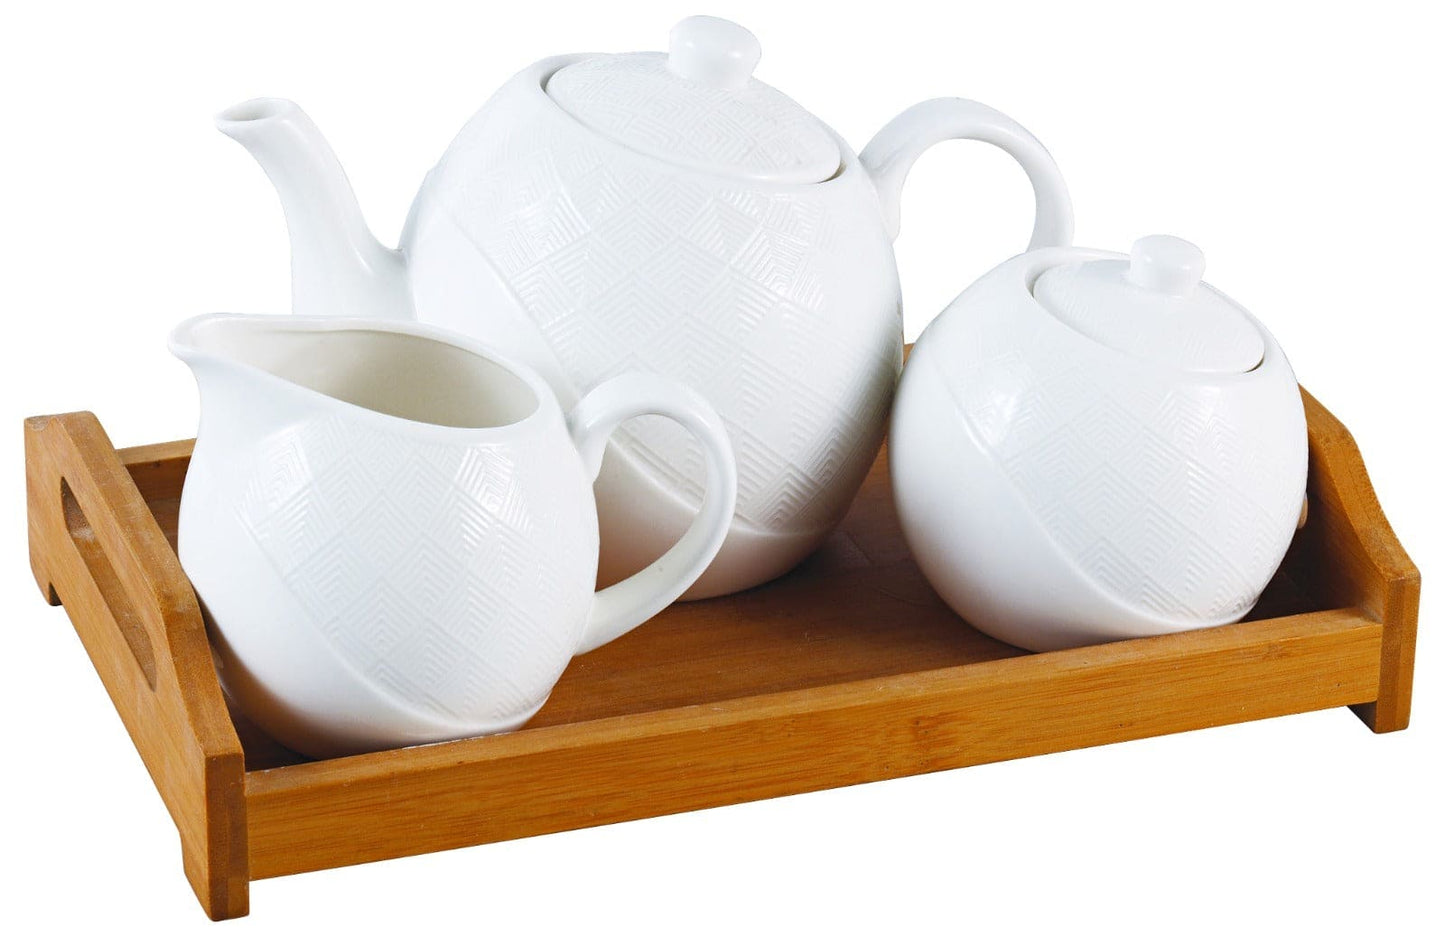 Tea Set Ceramic onestopbazaar